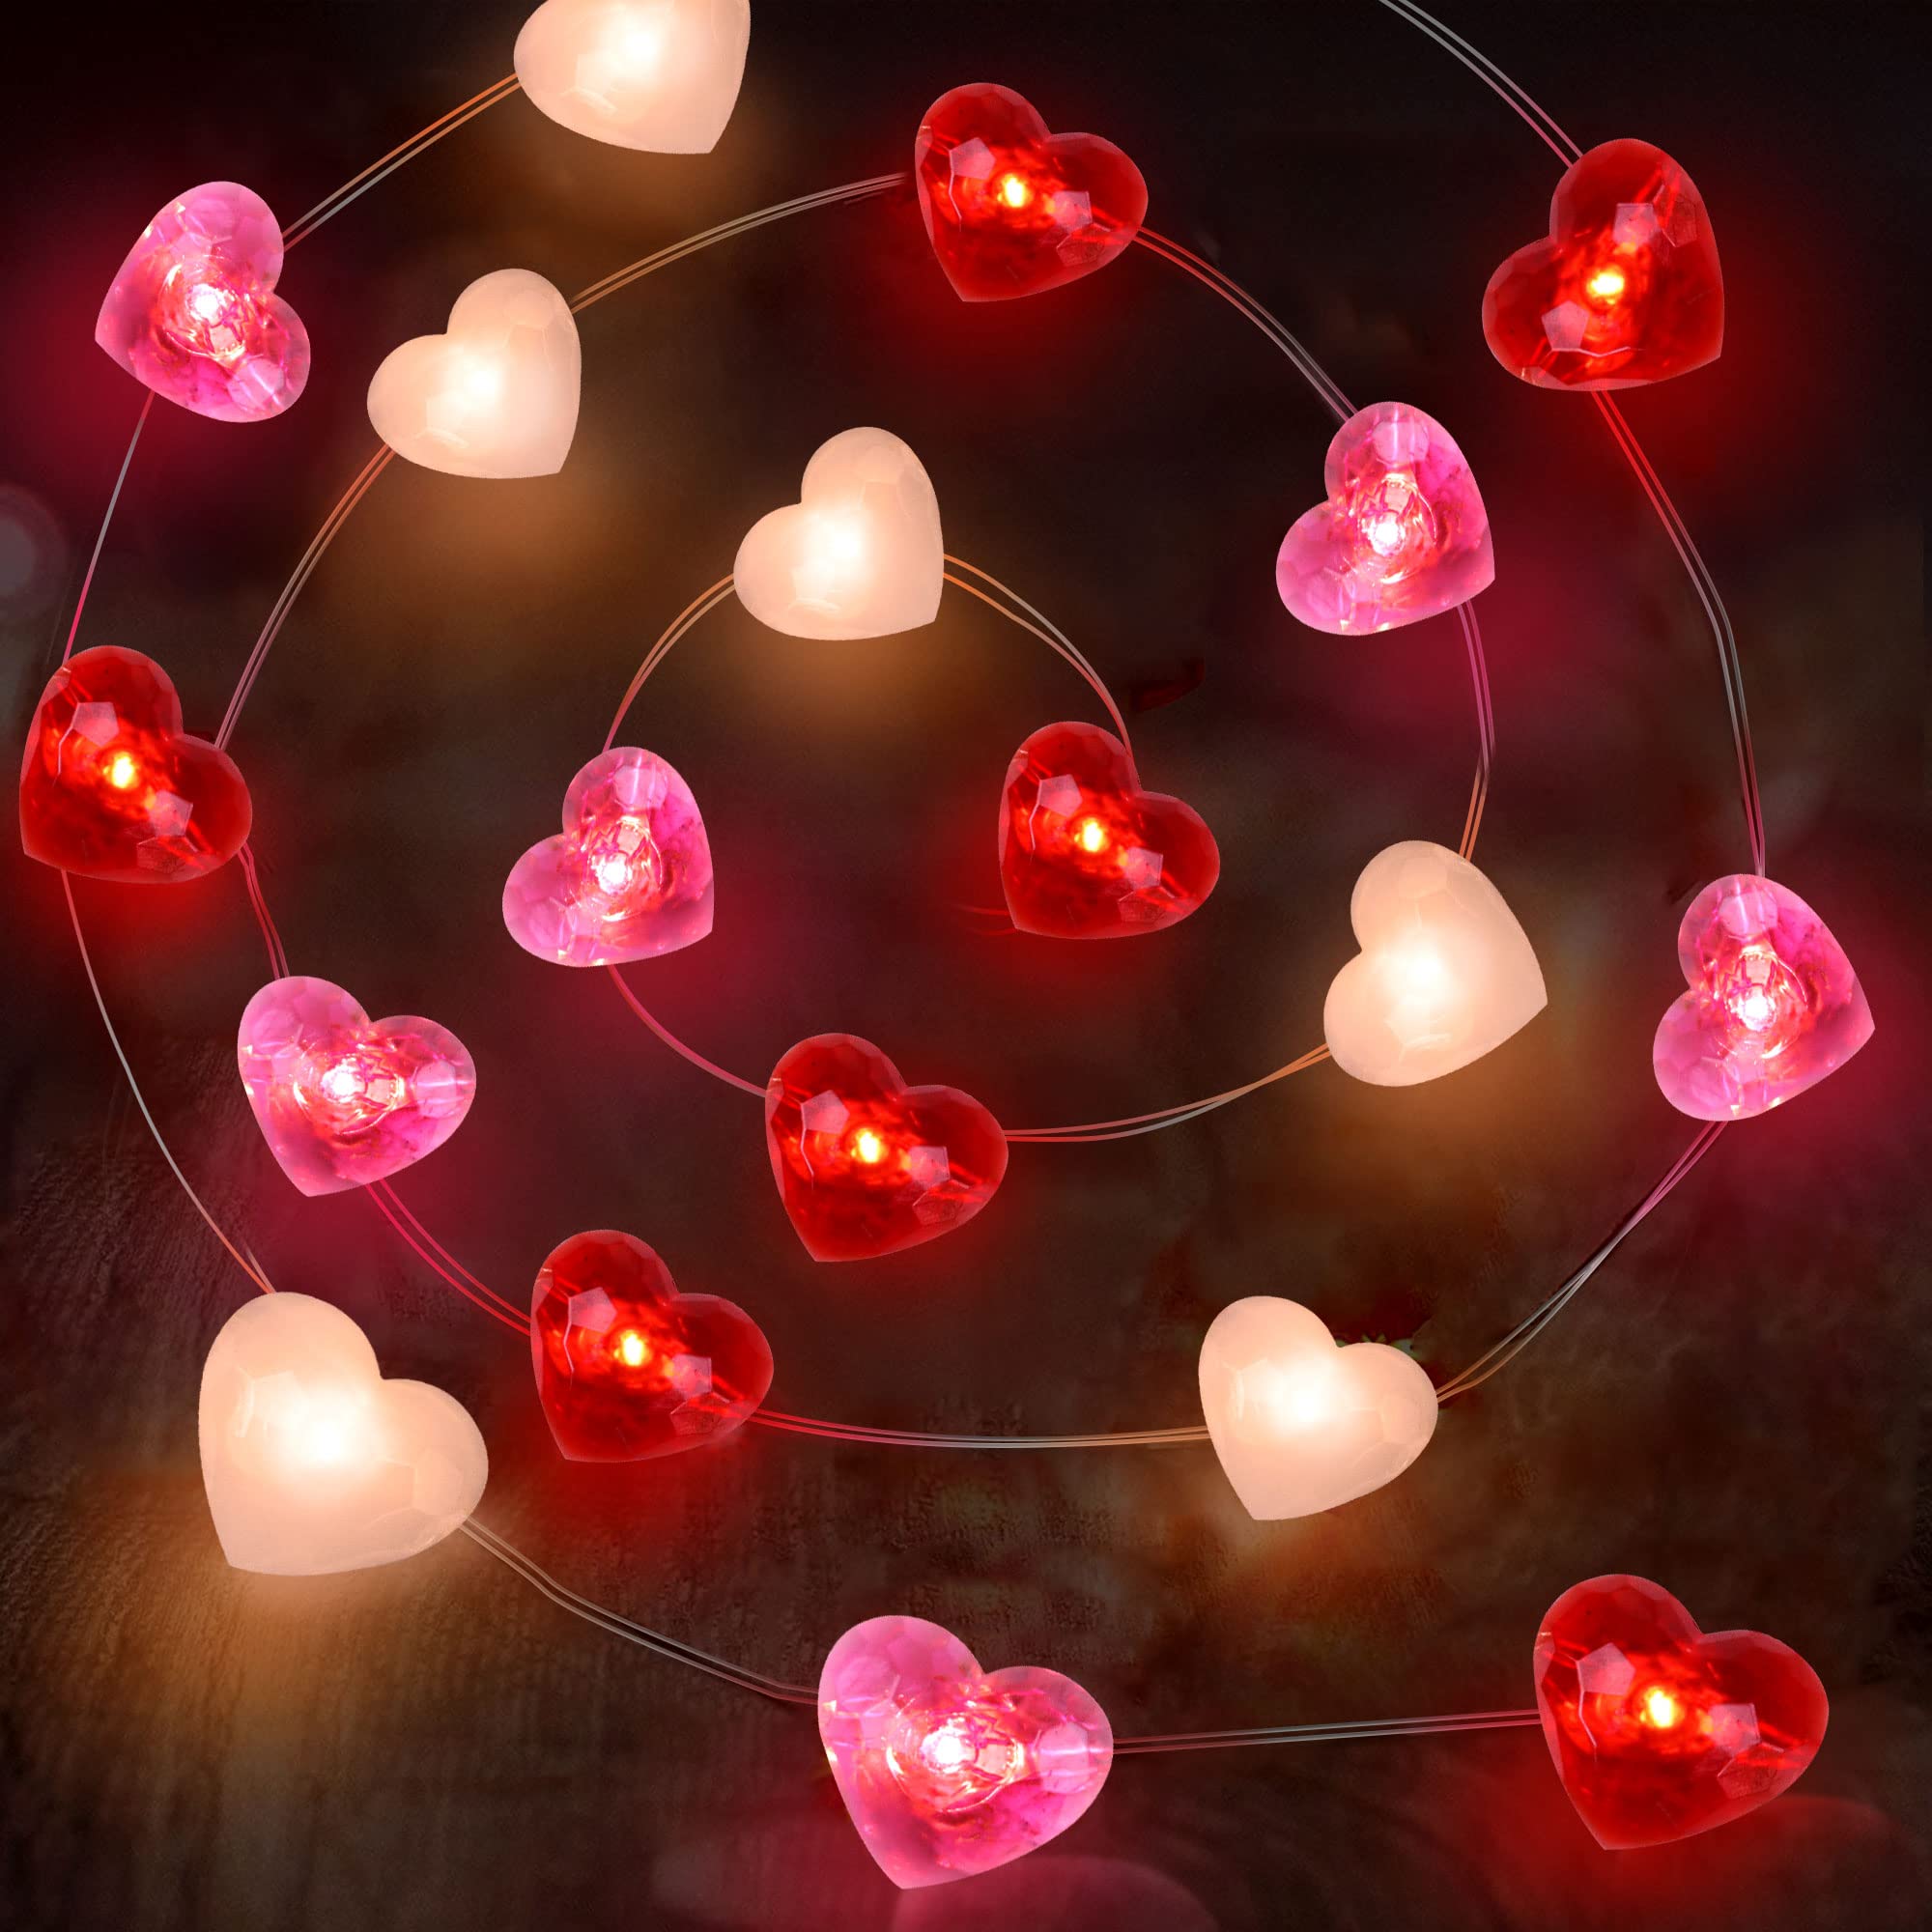 Mosoan Valentine's Day Lights